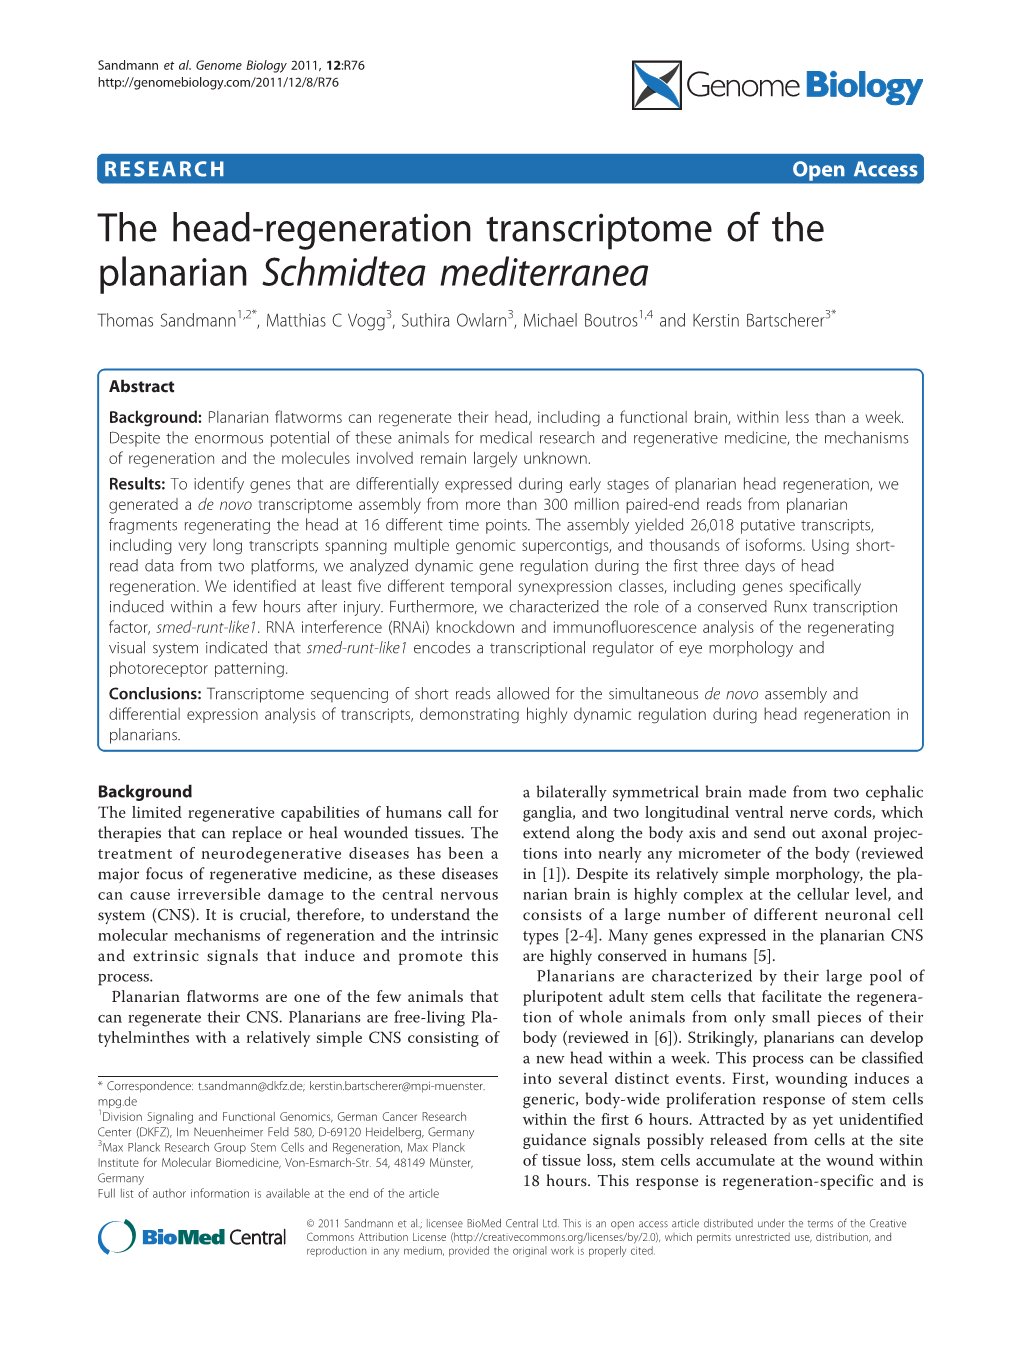 The Head-Regeneration Transcriptome of the Planarian Schmidtea